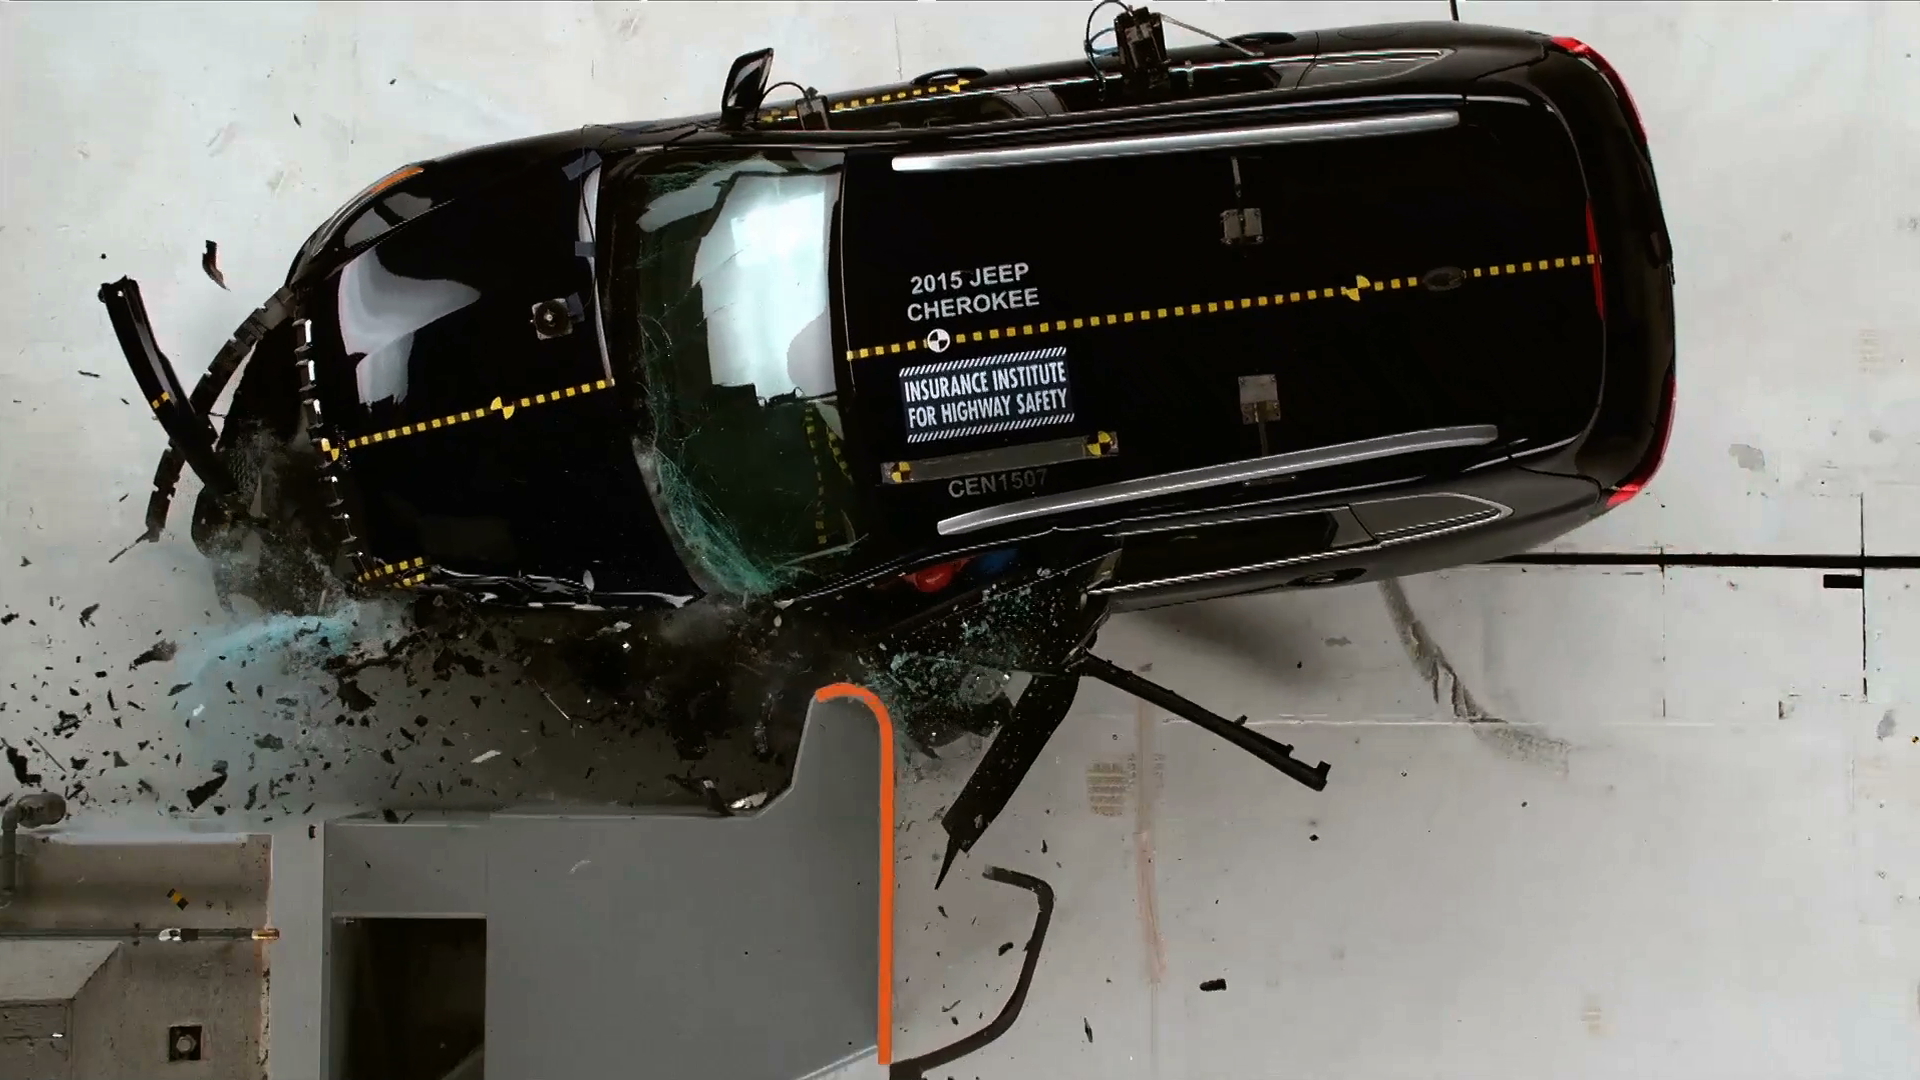 instal the new for windows Stunt Car Crash Test